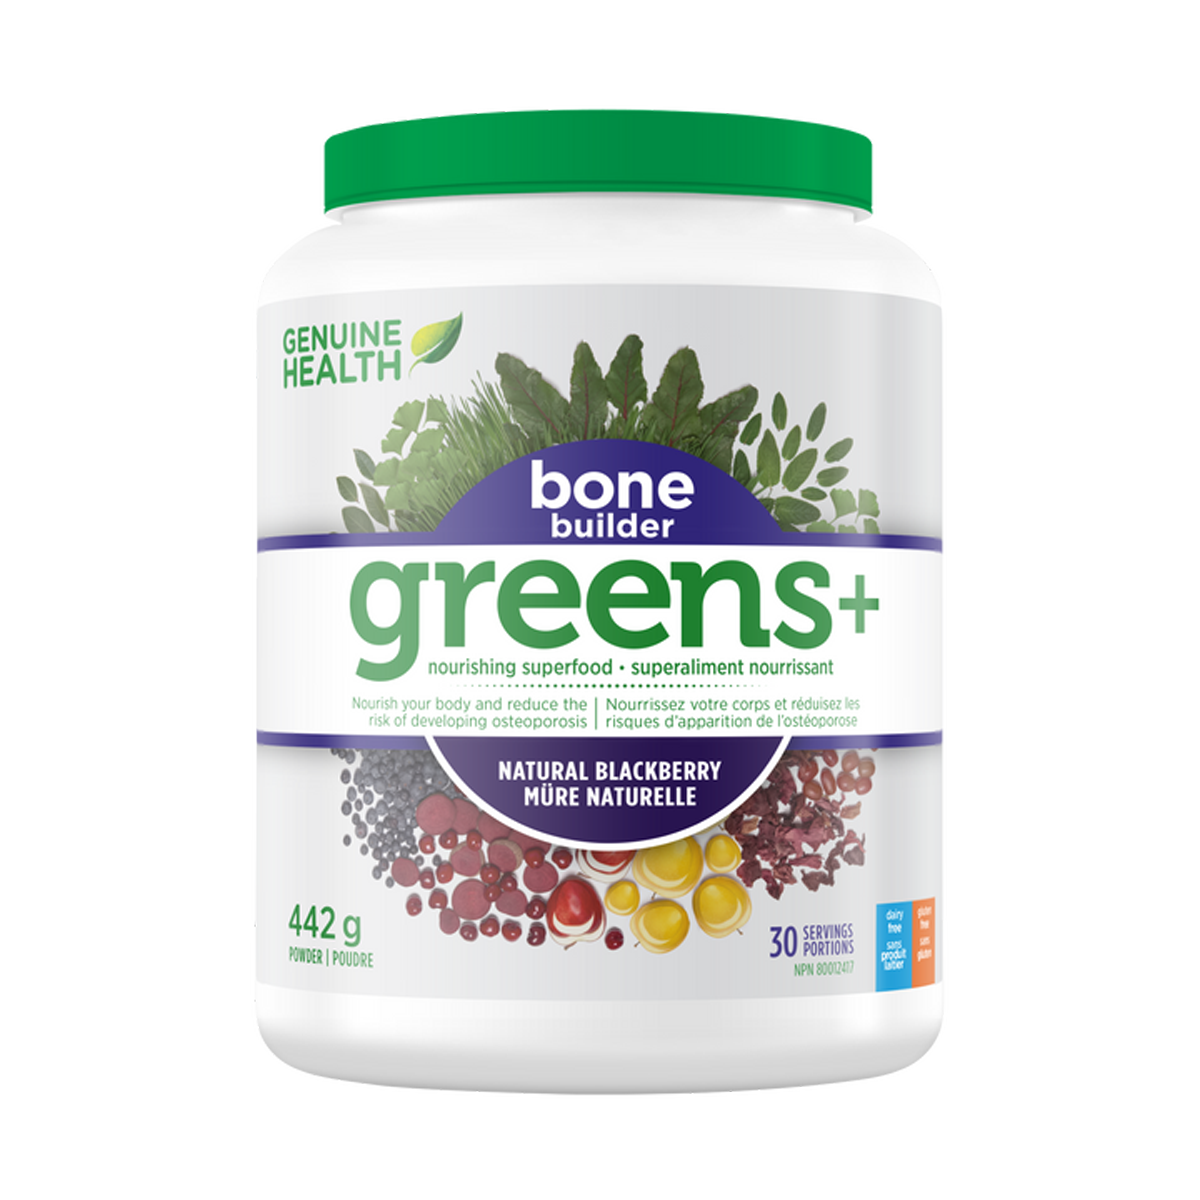 Genuine Health Greens+ Bone Builder Blackberry 442g